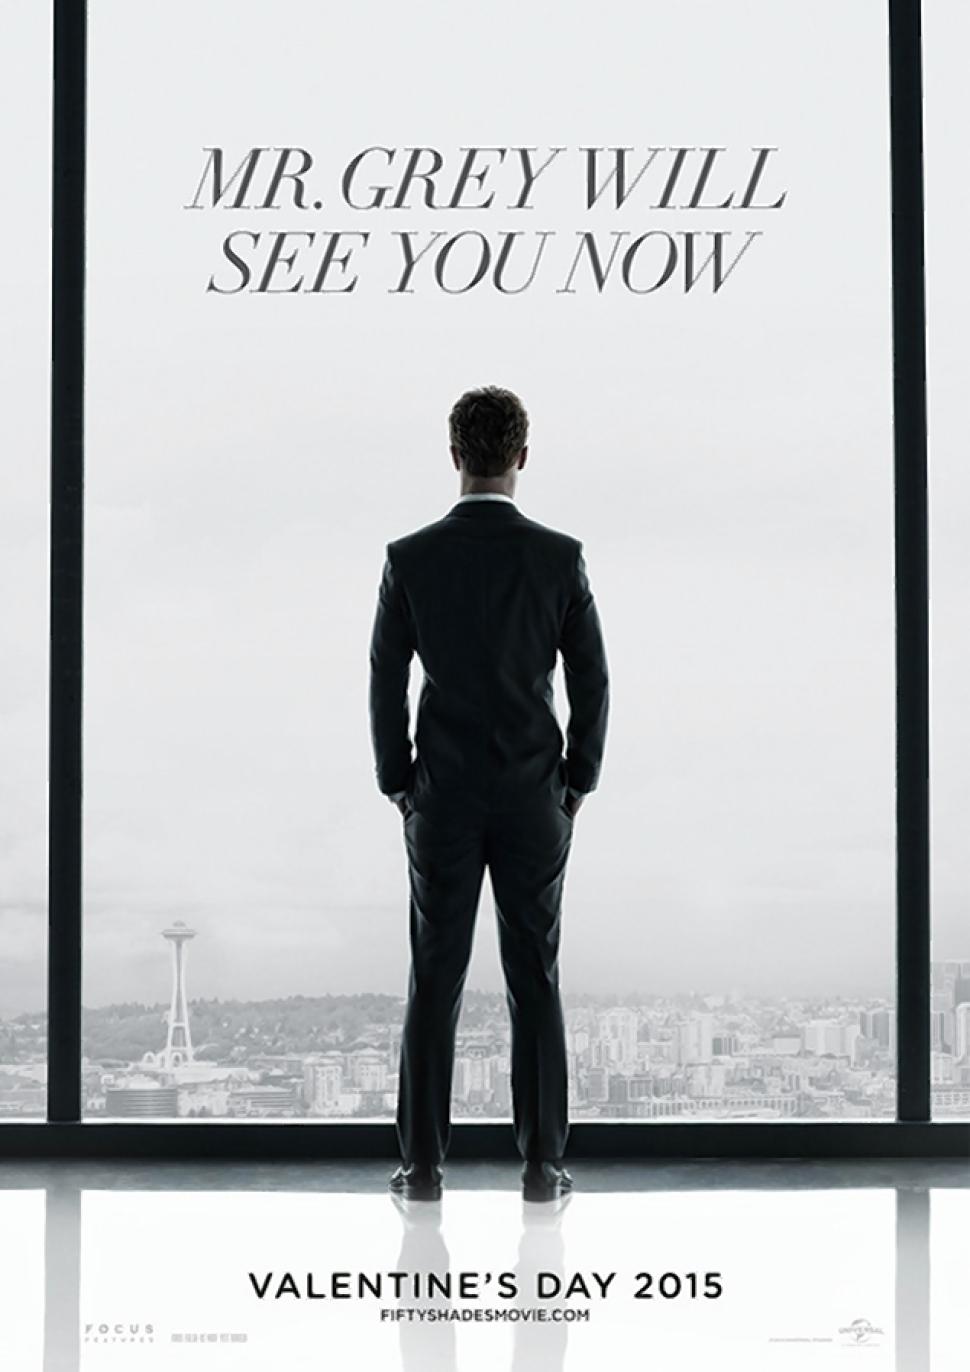 Watch 'Fifty Shades of Grey' Trailer Featuring Jamie Dornan